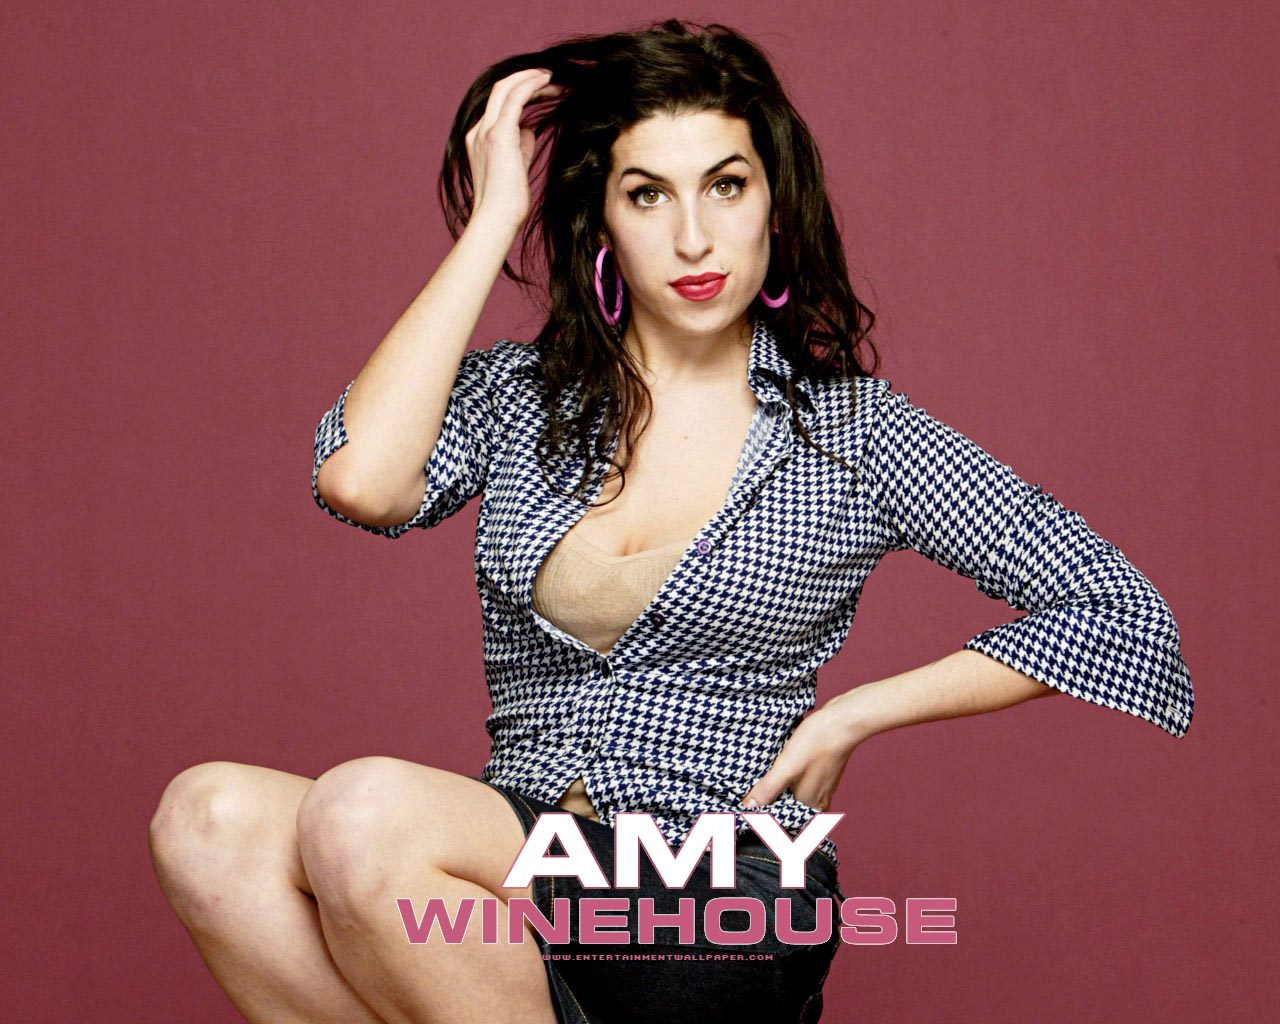 Amy Winehouse secretly held a concert Comeback - Info 24 Online1280 x 1024